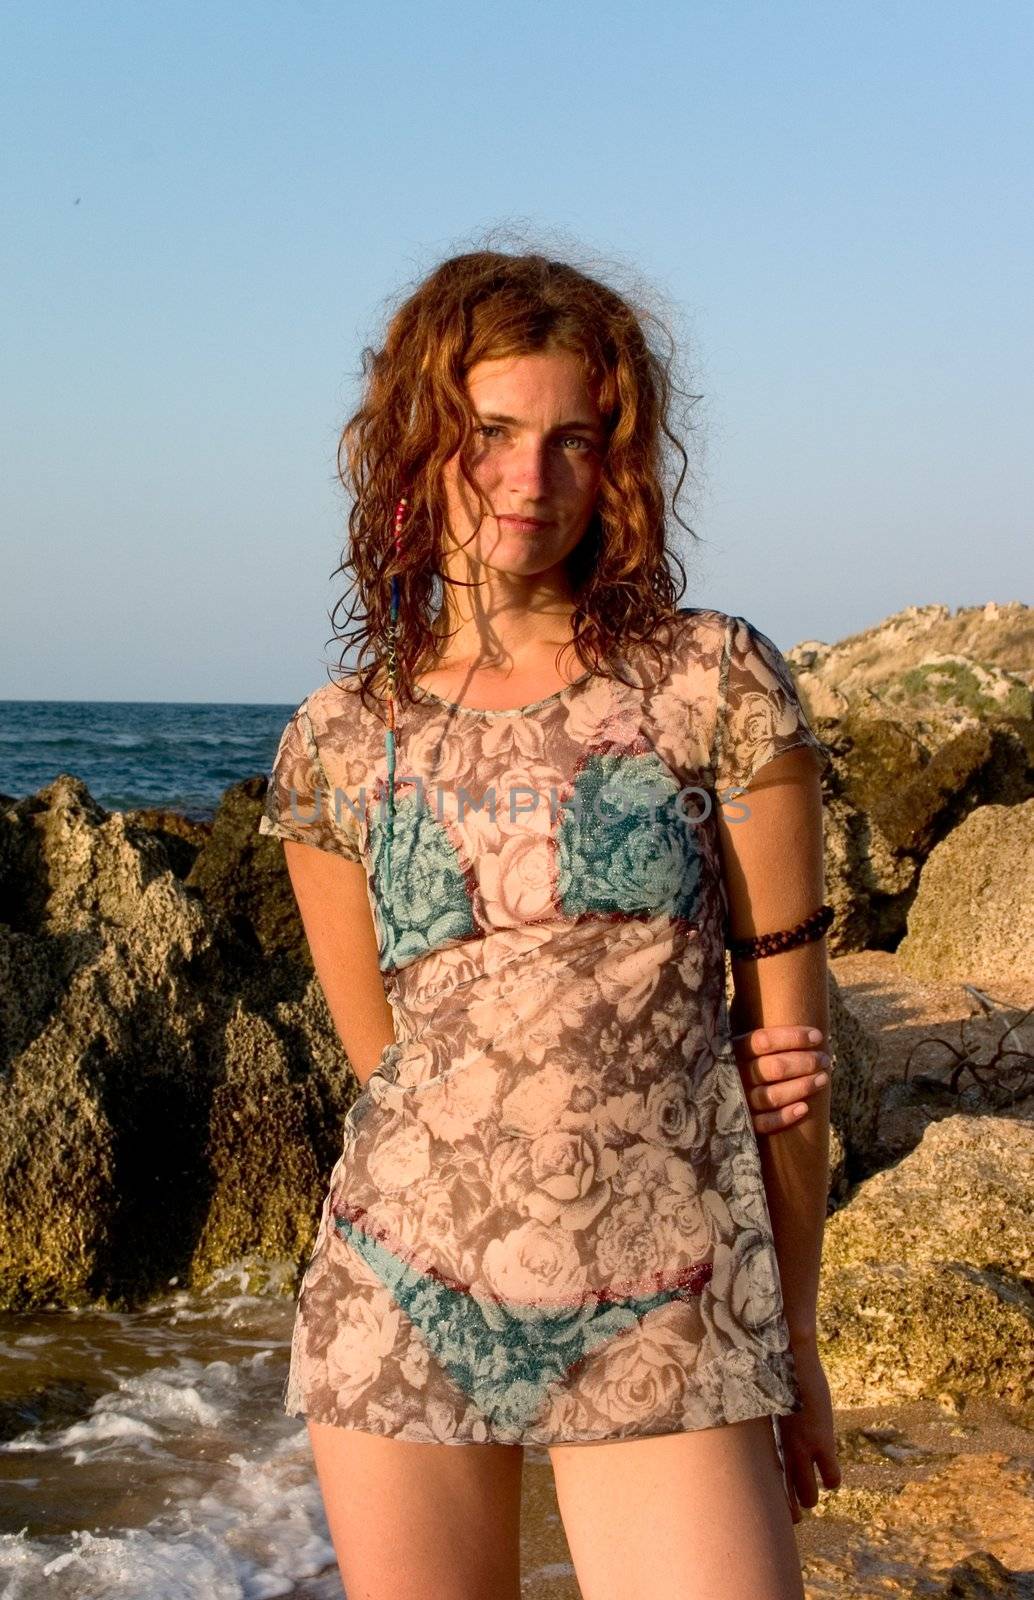 Girl in transparent dress and blue bikini at seaside